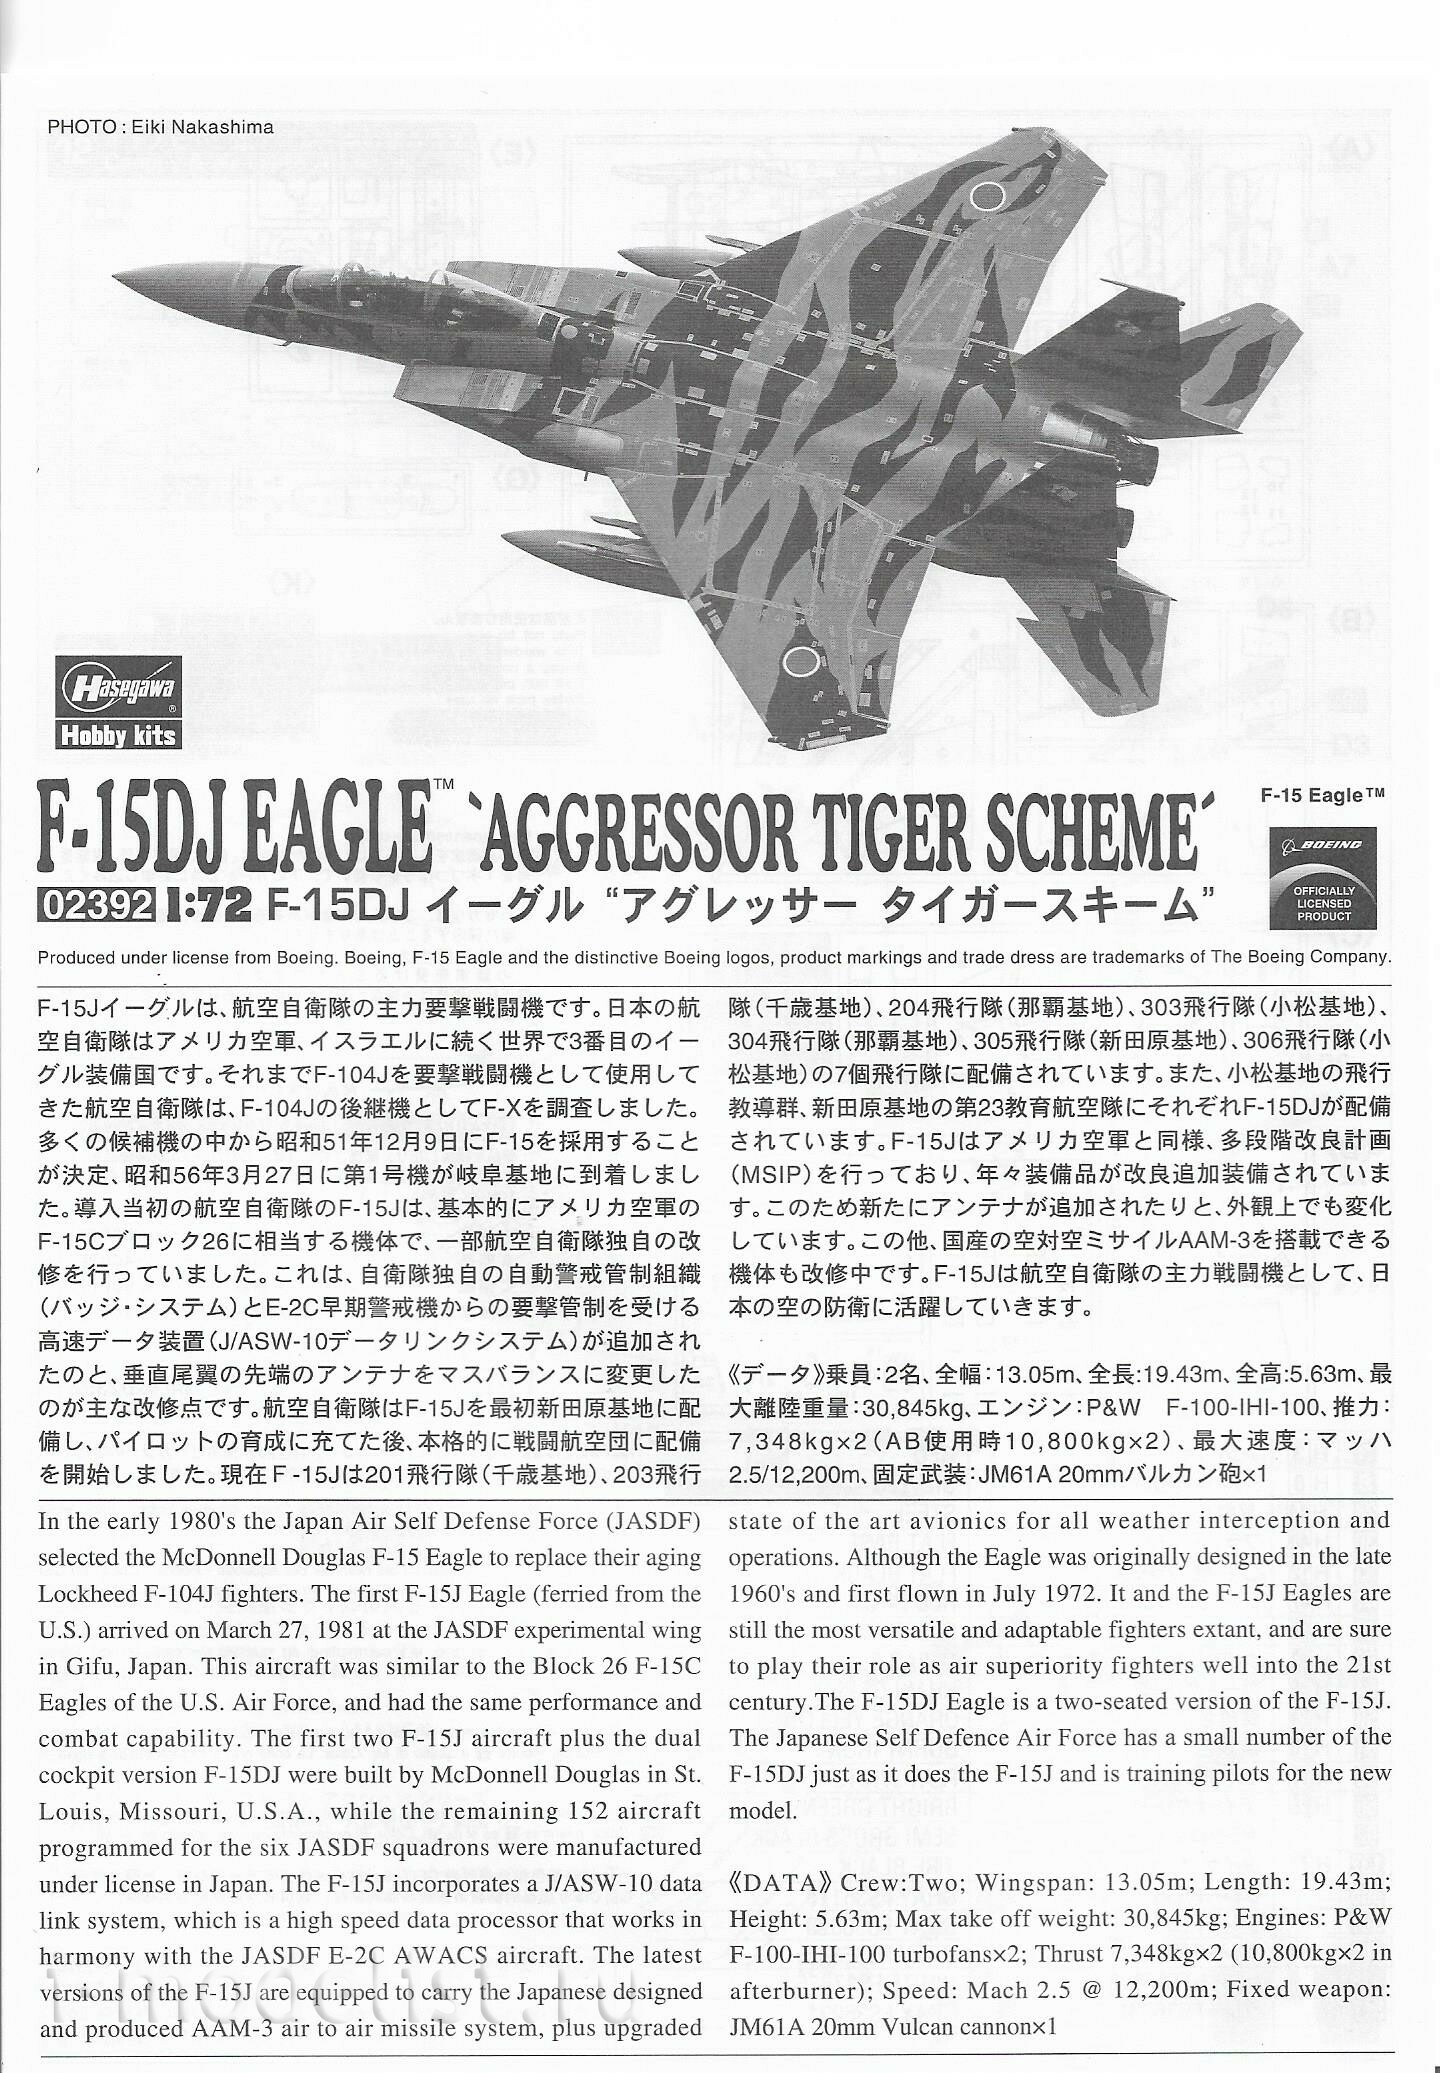 02392 Hasegawa 1/72 Истребитель F-15DJ Eagle 'Aggressor Tiger Scheme'